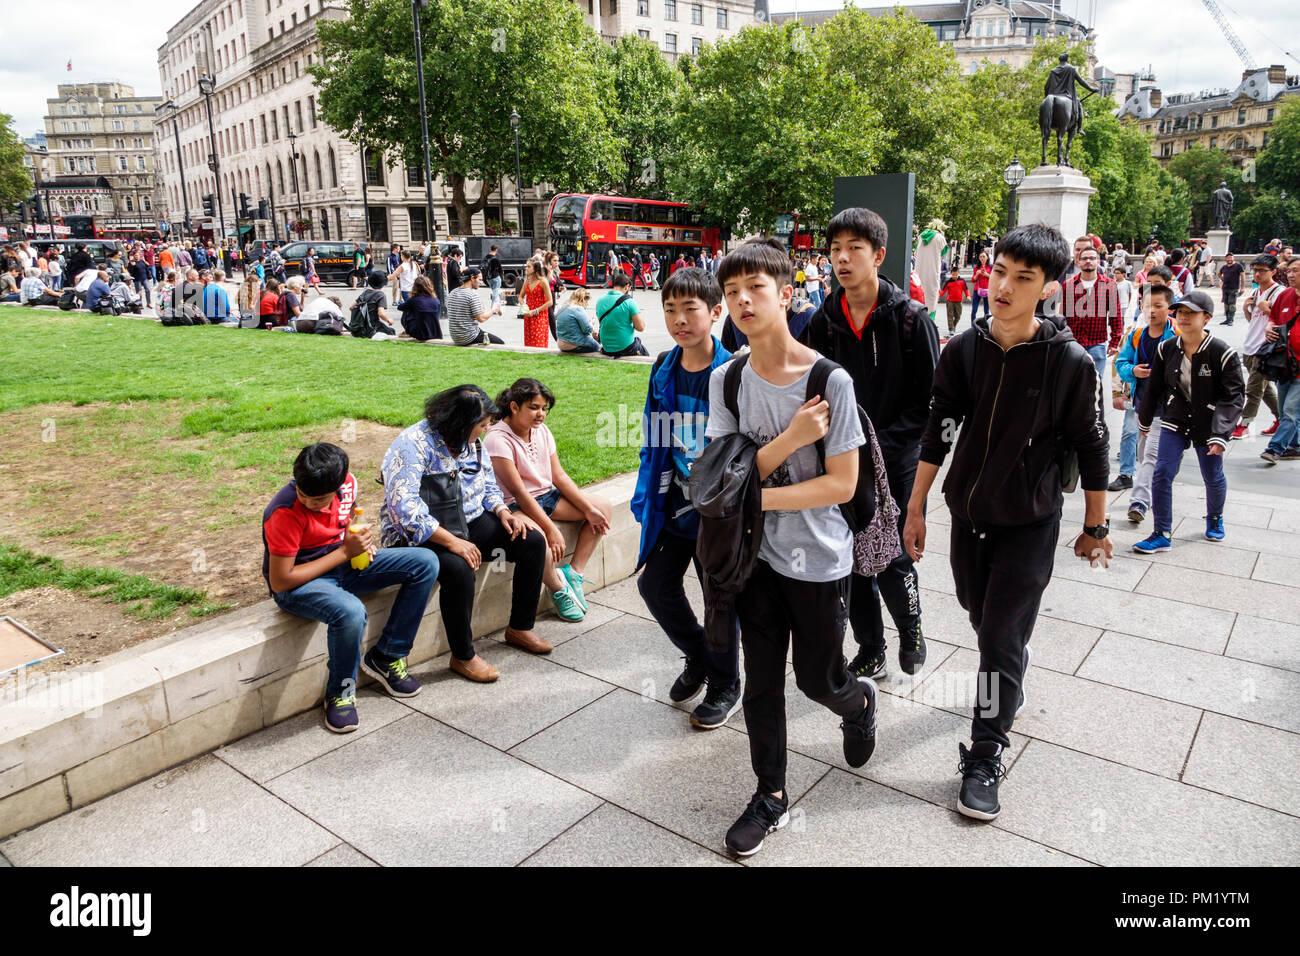 London England,UK,United Kingdom Great Britain,Trafalgar Square,plaza,crowd,Asian Asians ethnic immigrant immigrants minority,boy boys,male kid kids c Stock Photo